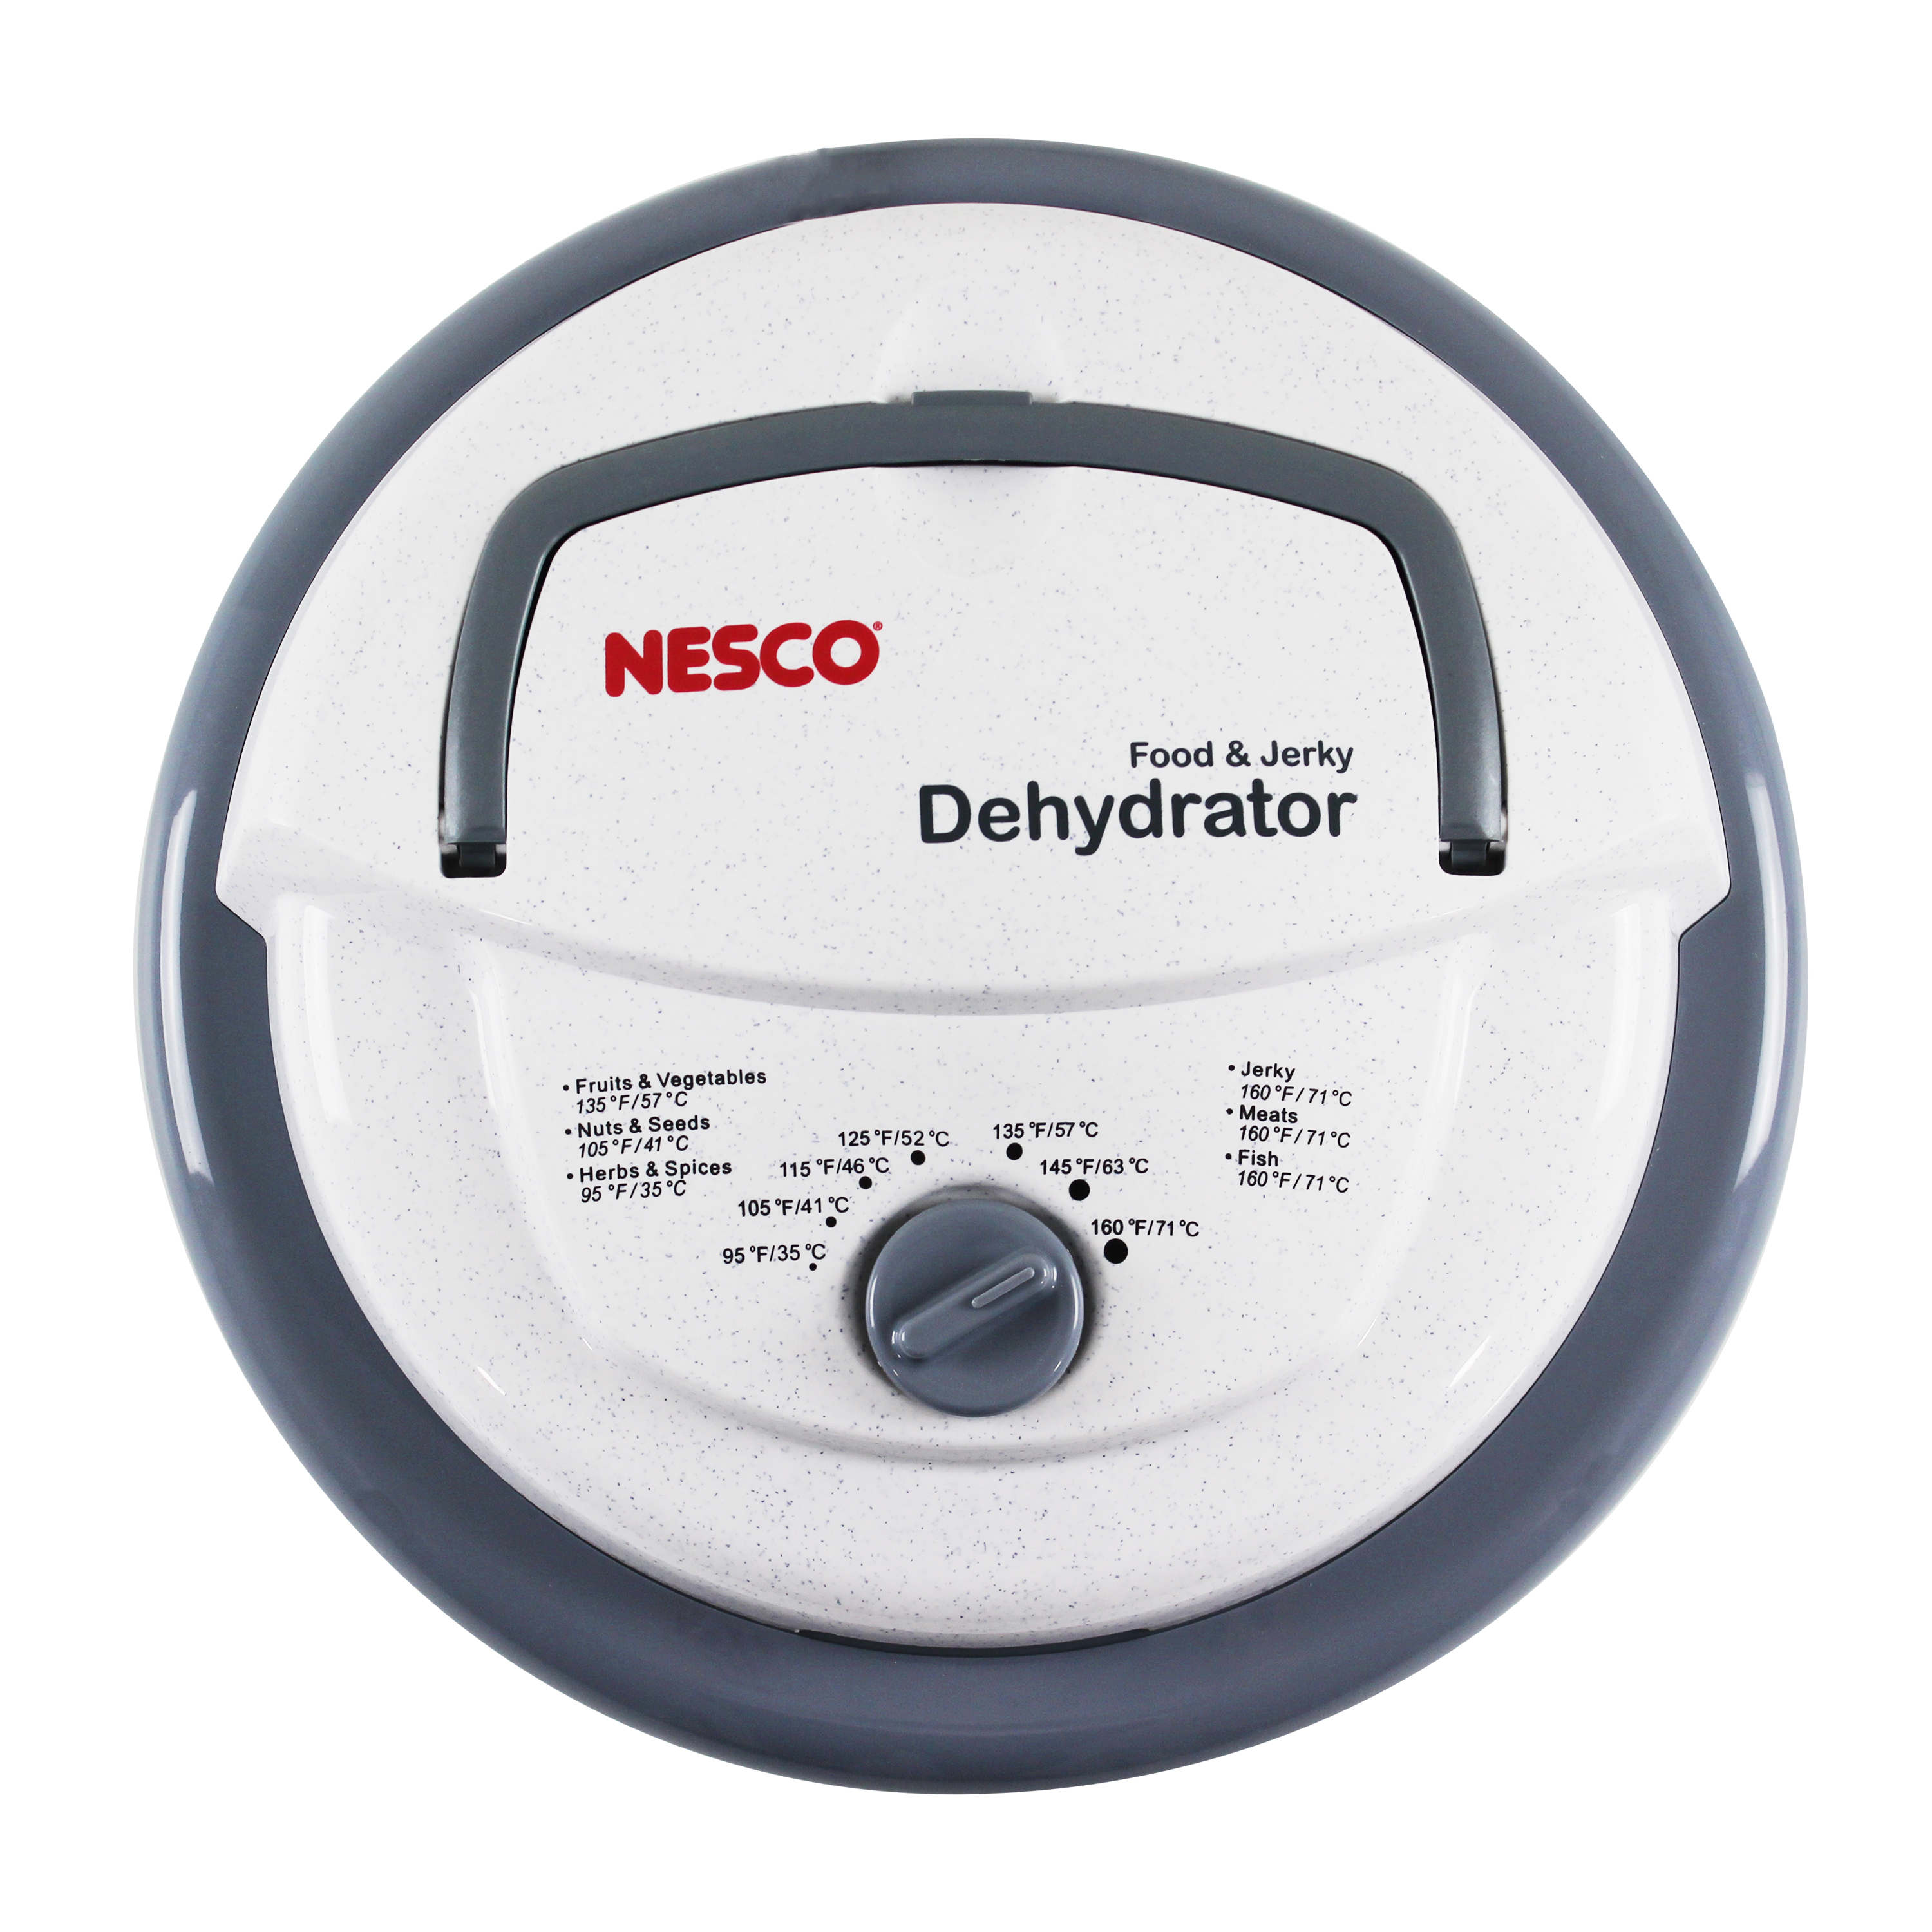 Nesco Professional 600W 5-Tray Food Dehydrator, FD-75PR - image 3 of 9